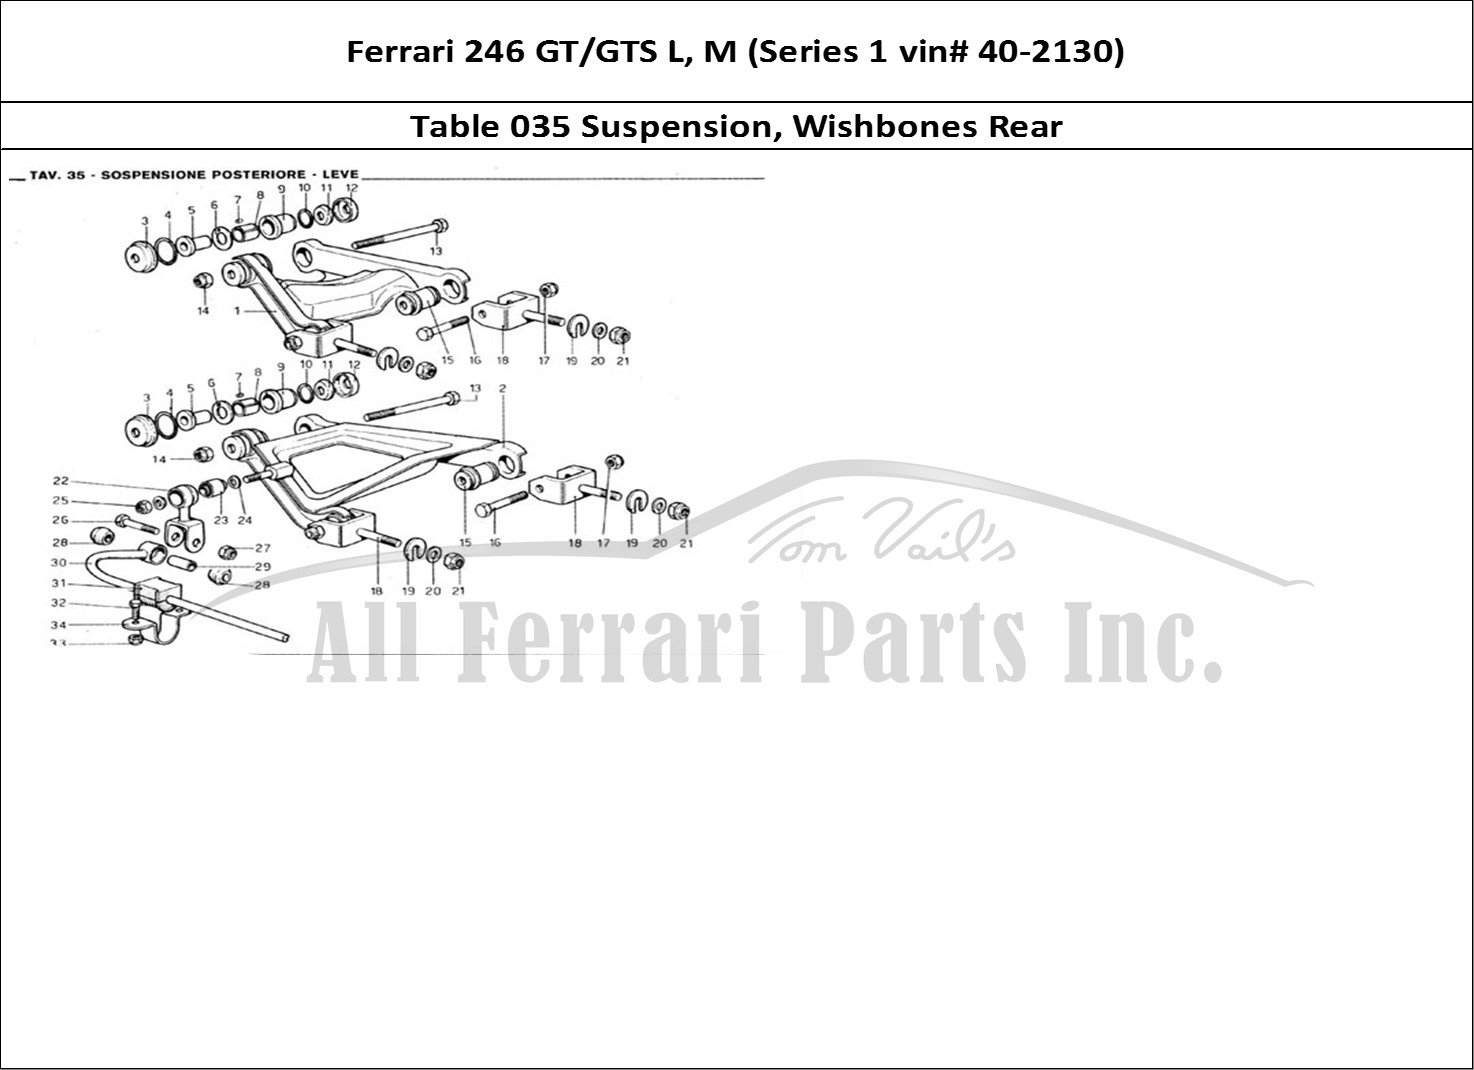 Ferrari Parts Ferrari 246 GT Series 1 Page 035 Rear Suspension - Wishbon